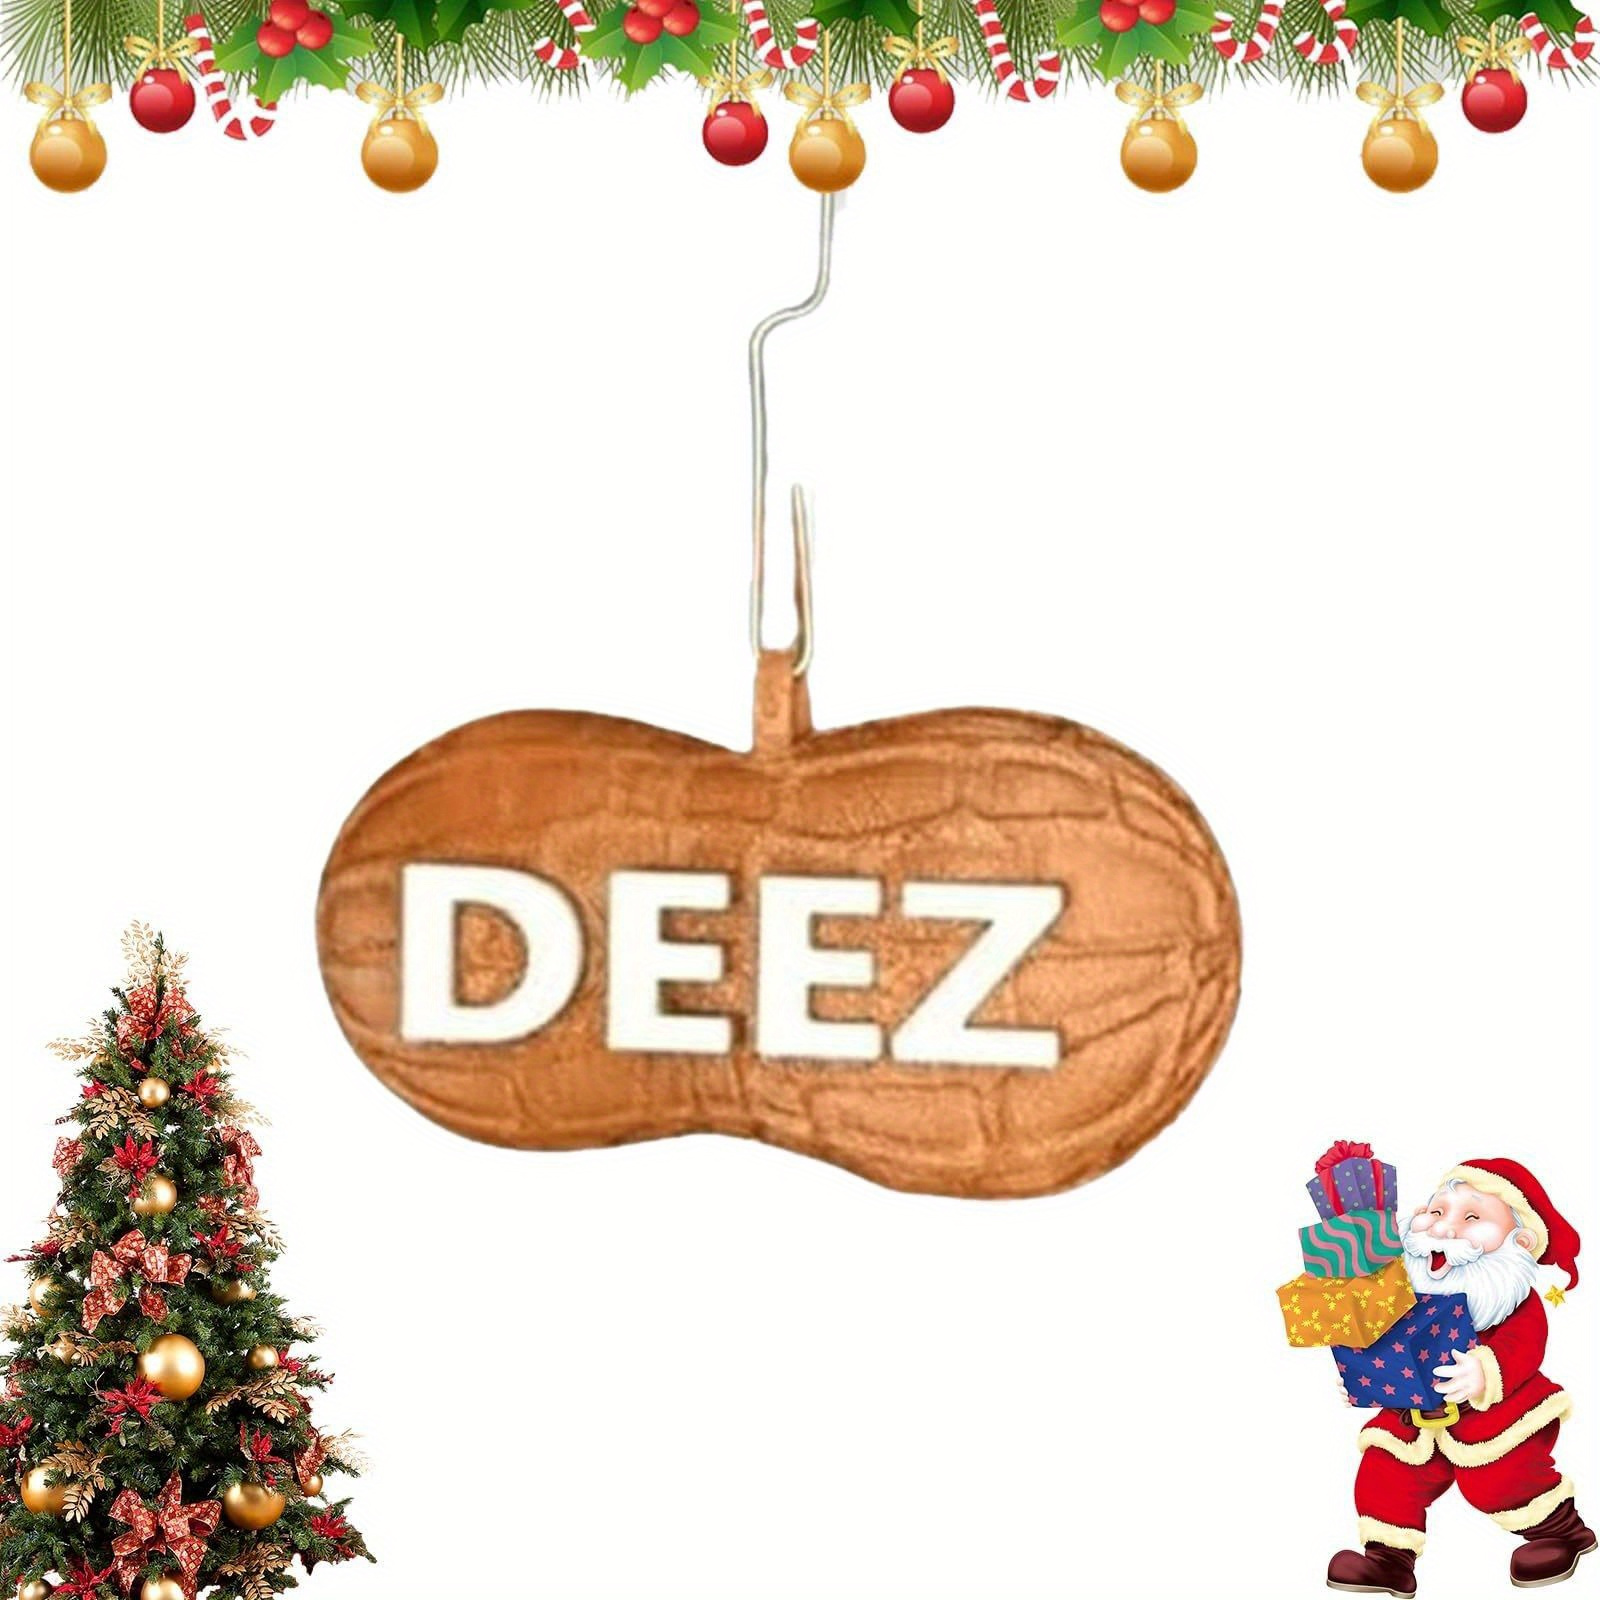 Nothing Gift, Gag Gift, Funny, Tree Decor, Holiday, Christmas 